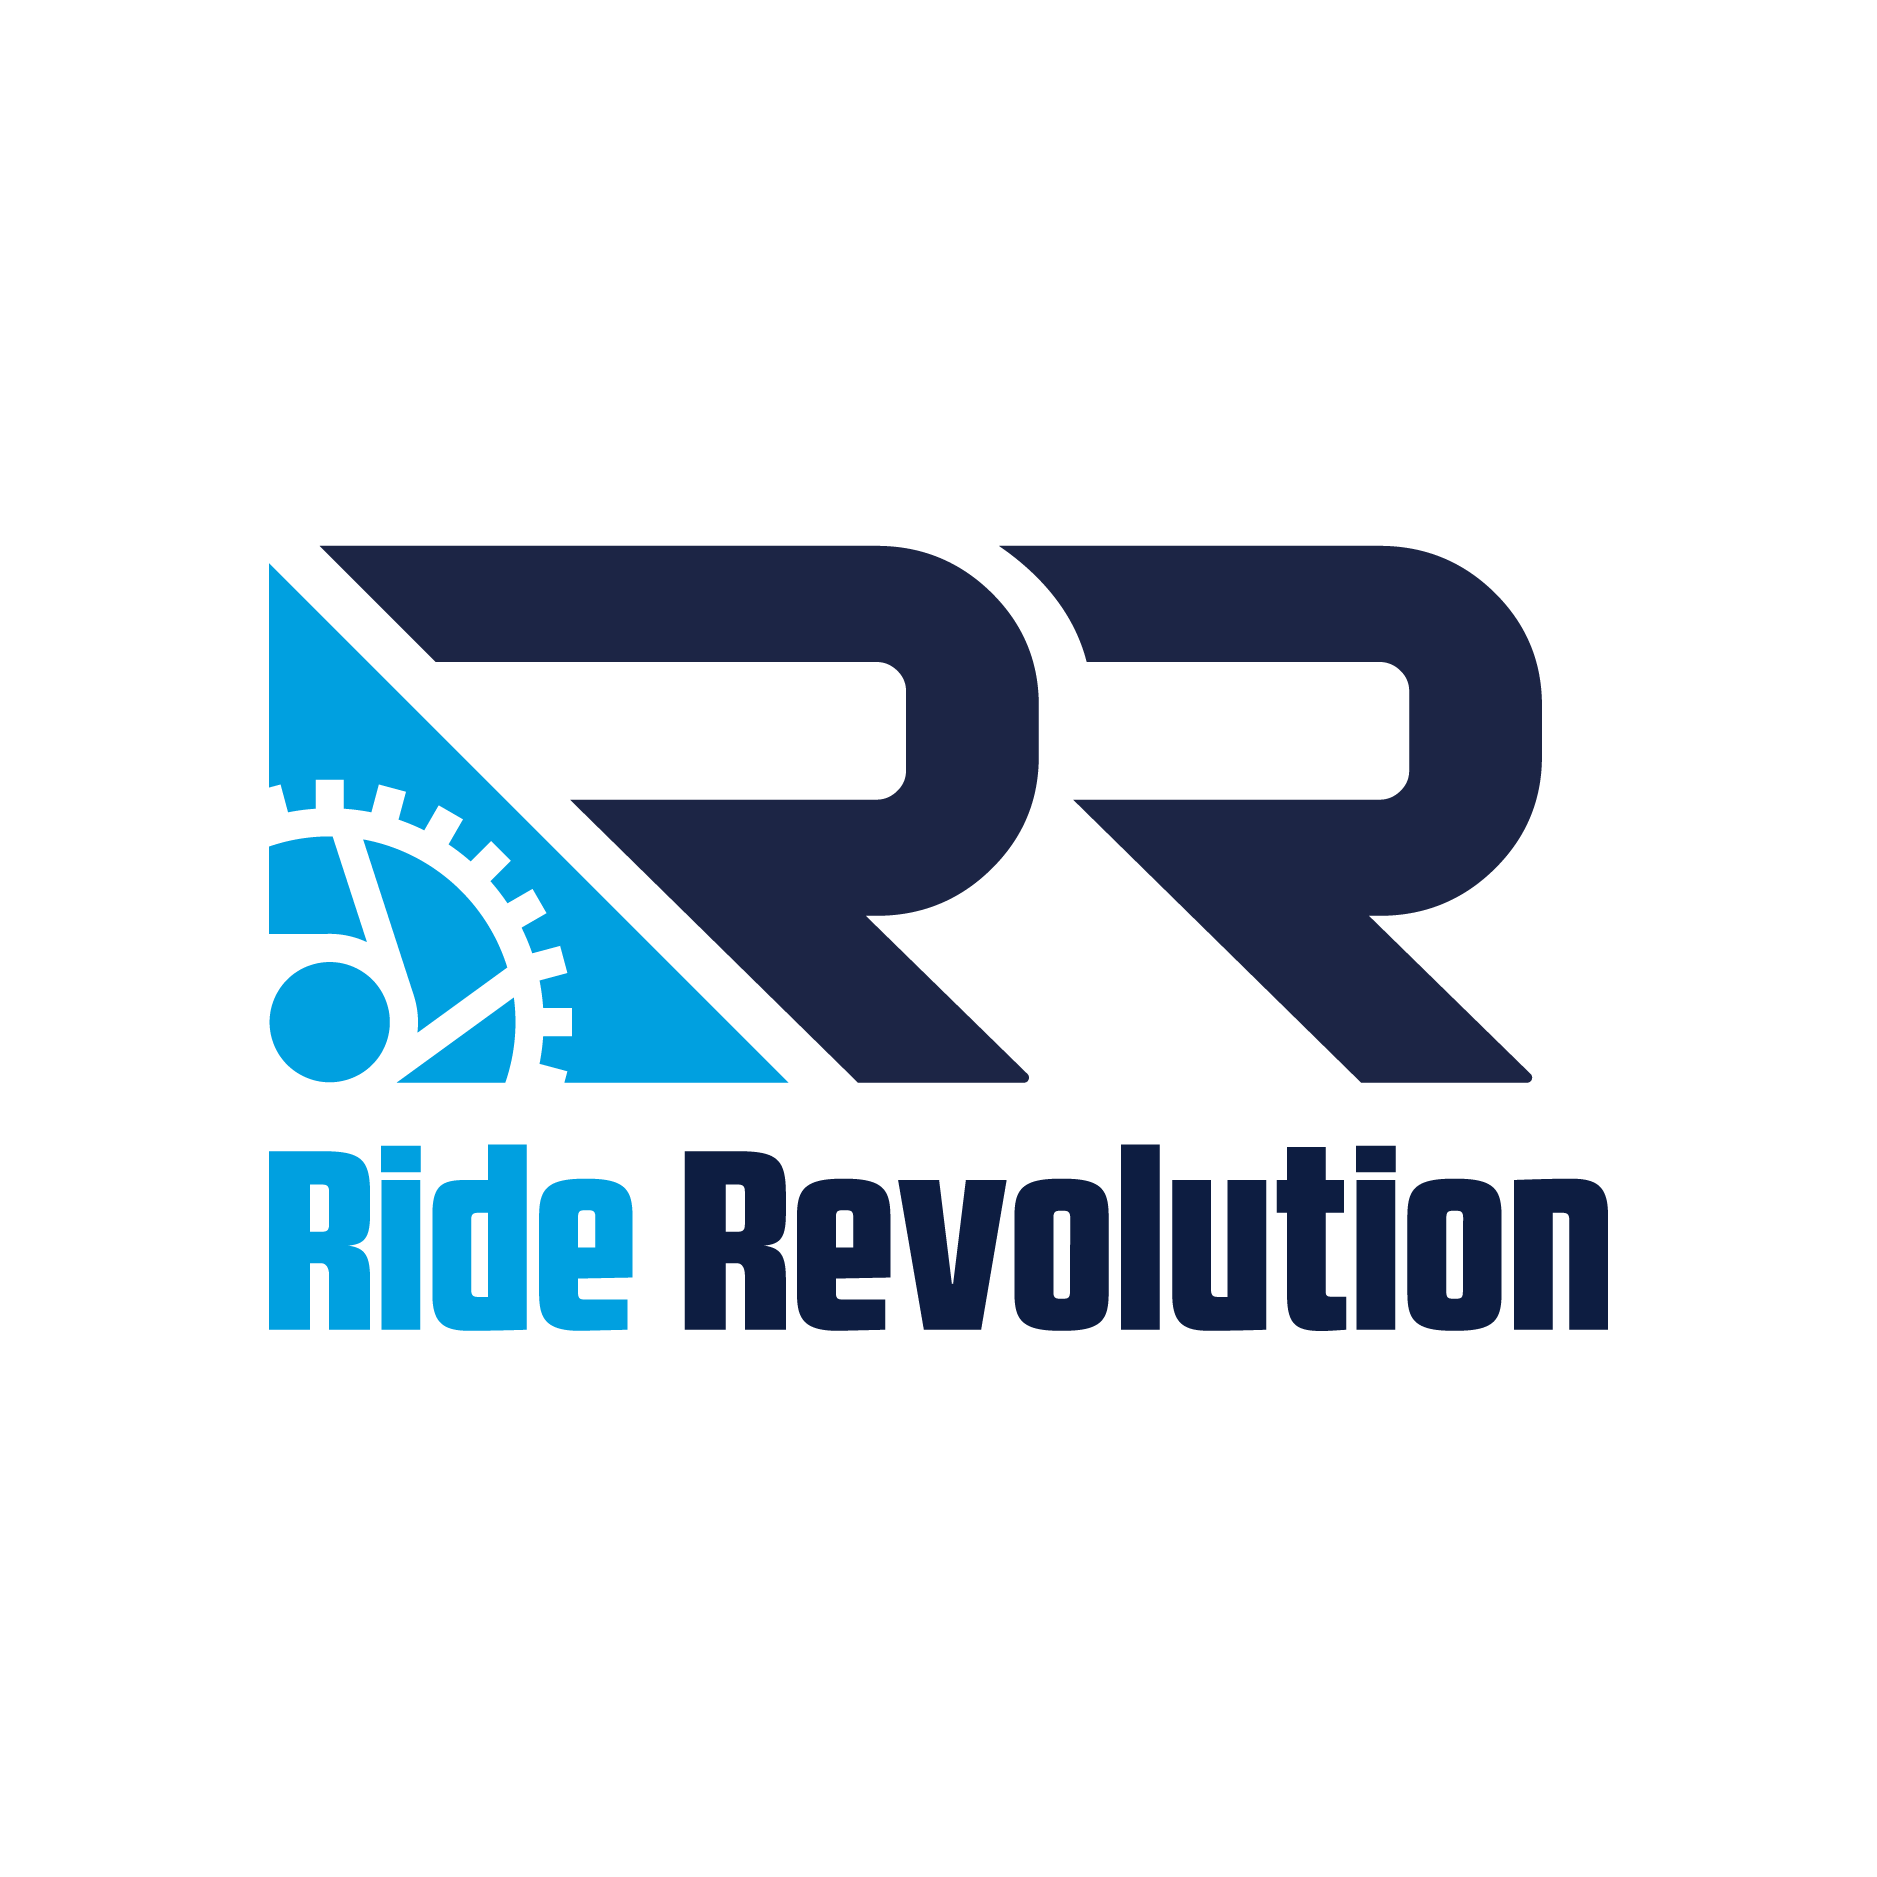 Club Image for RIDE REVOLUTION